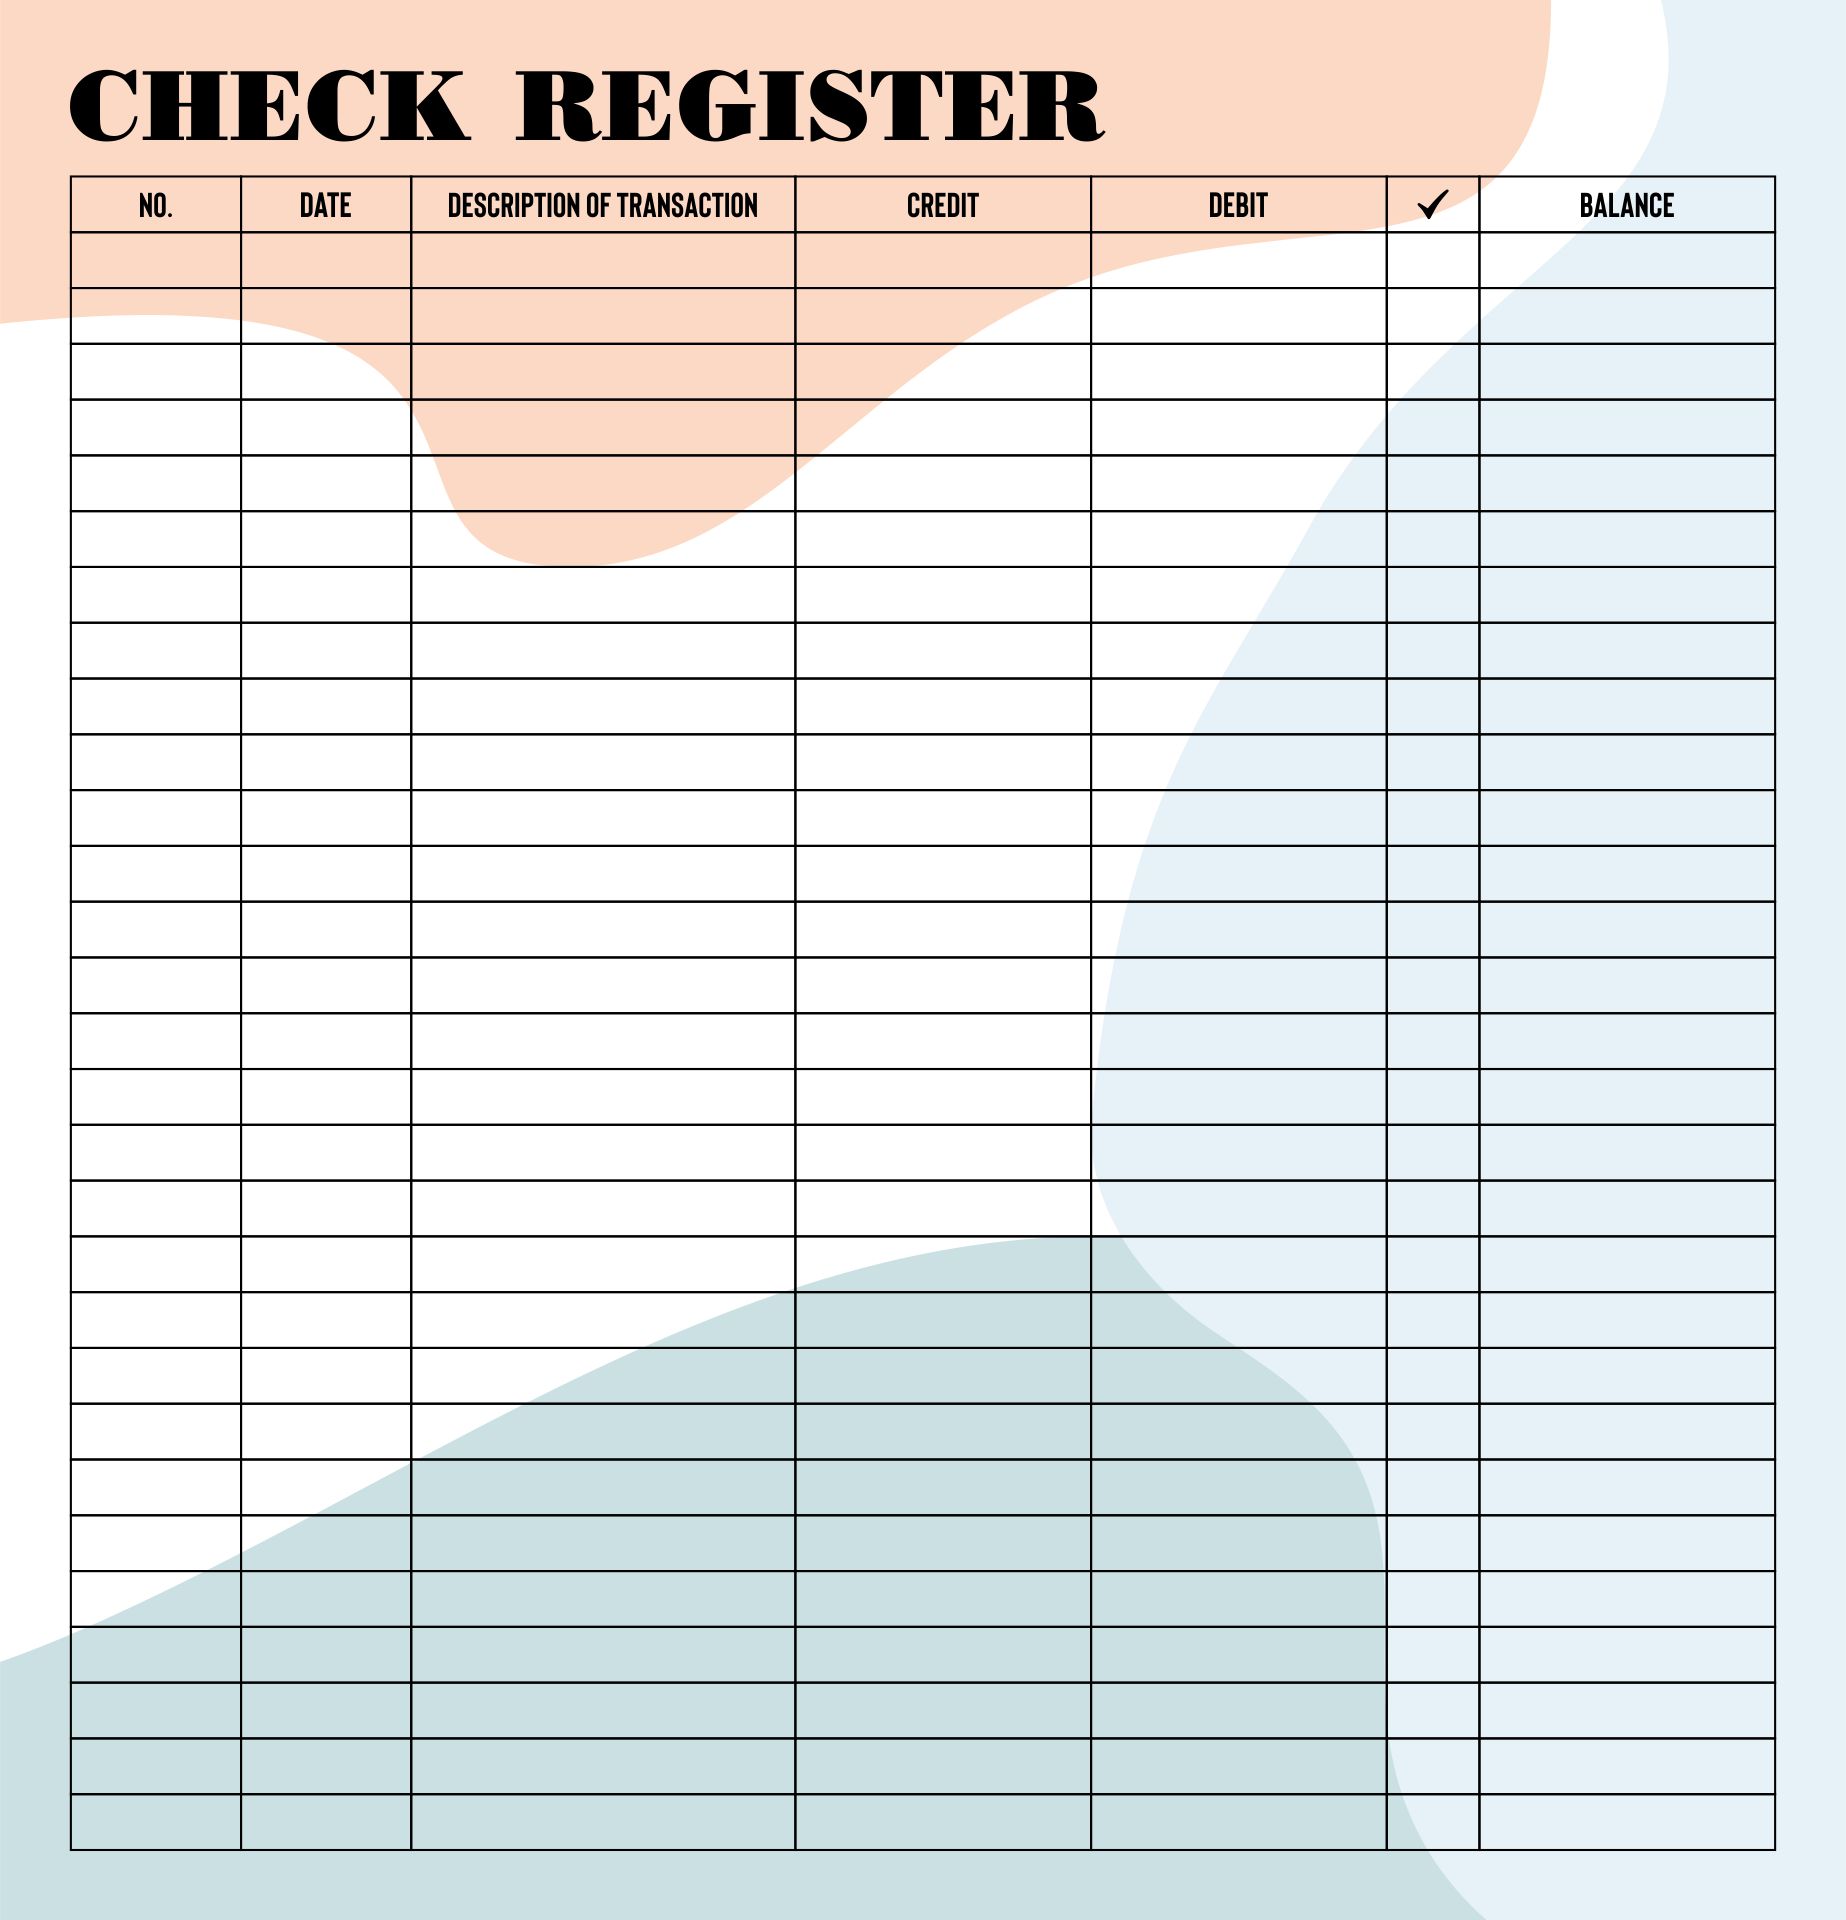 Printable Check Register Checkbook Size